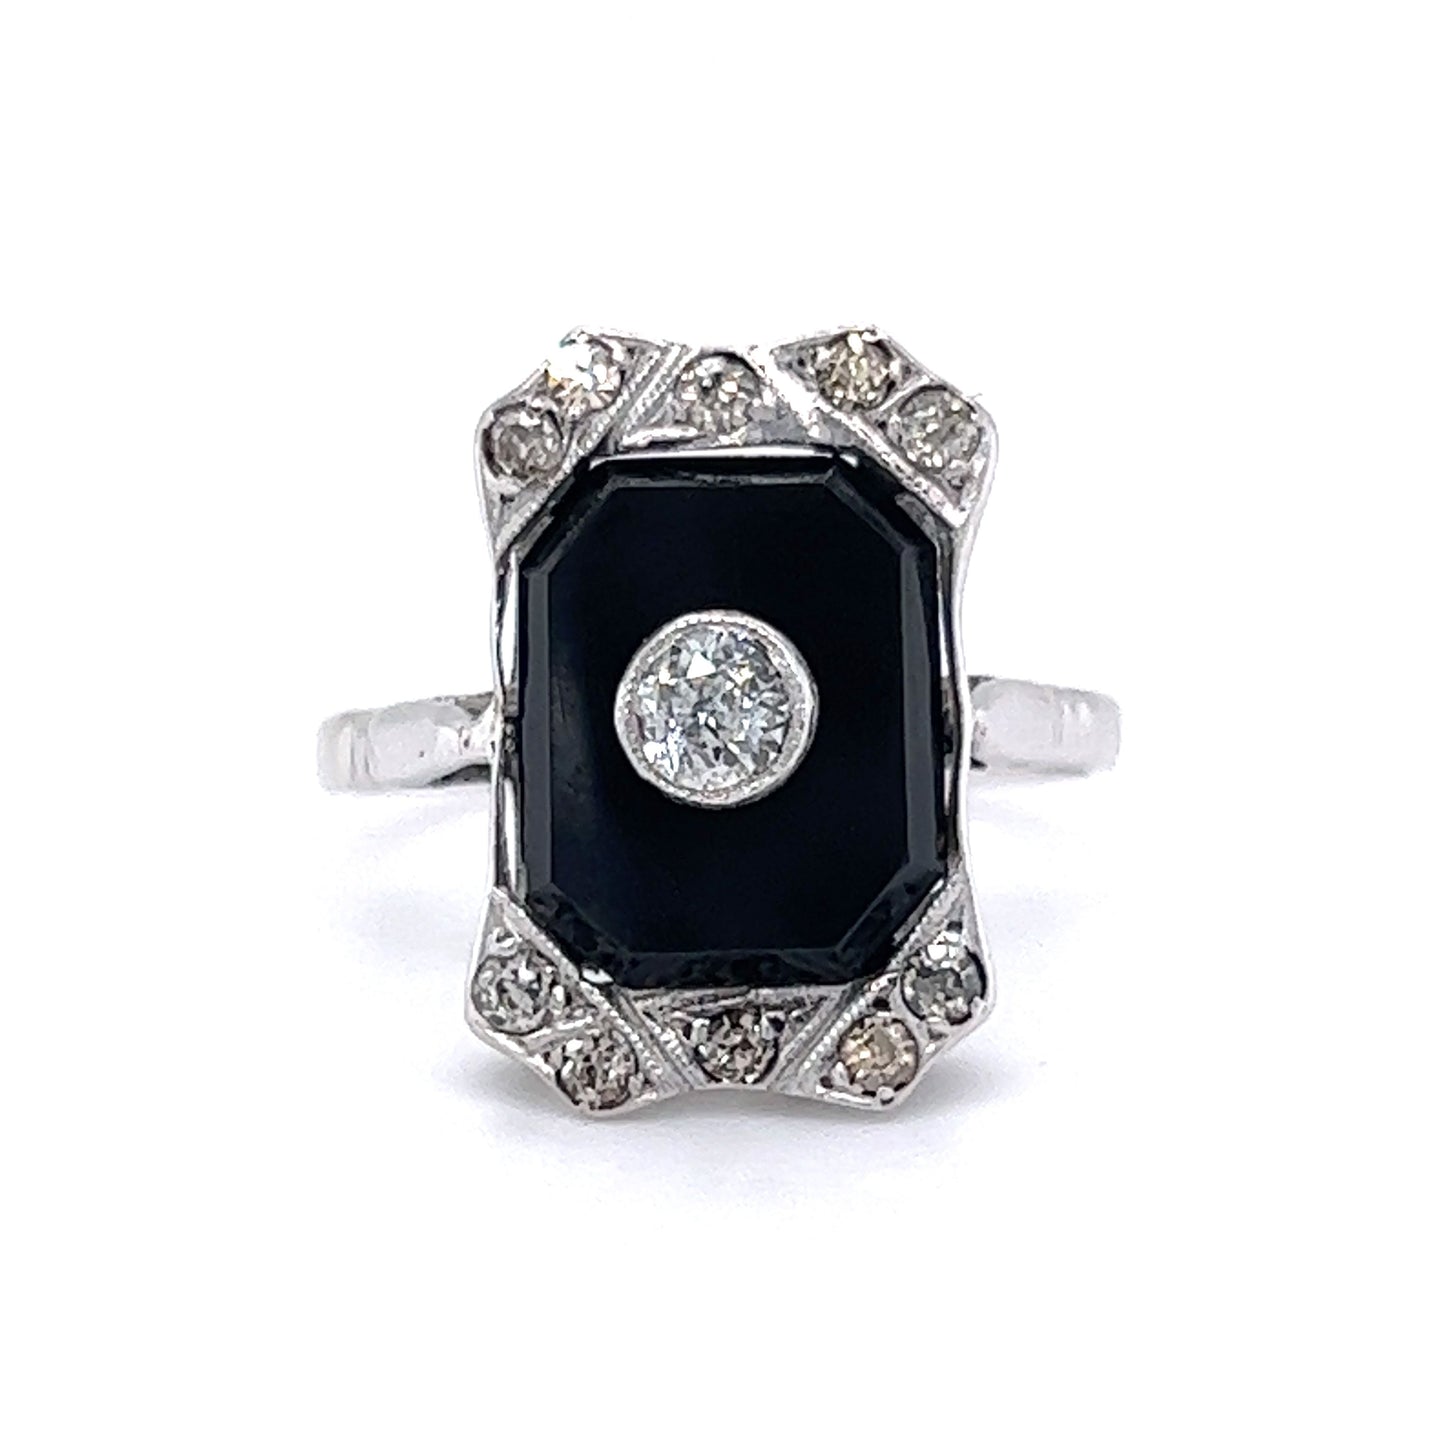 Vintage 1920's Onyx & Diamond Ring in 14k White Gold